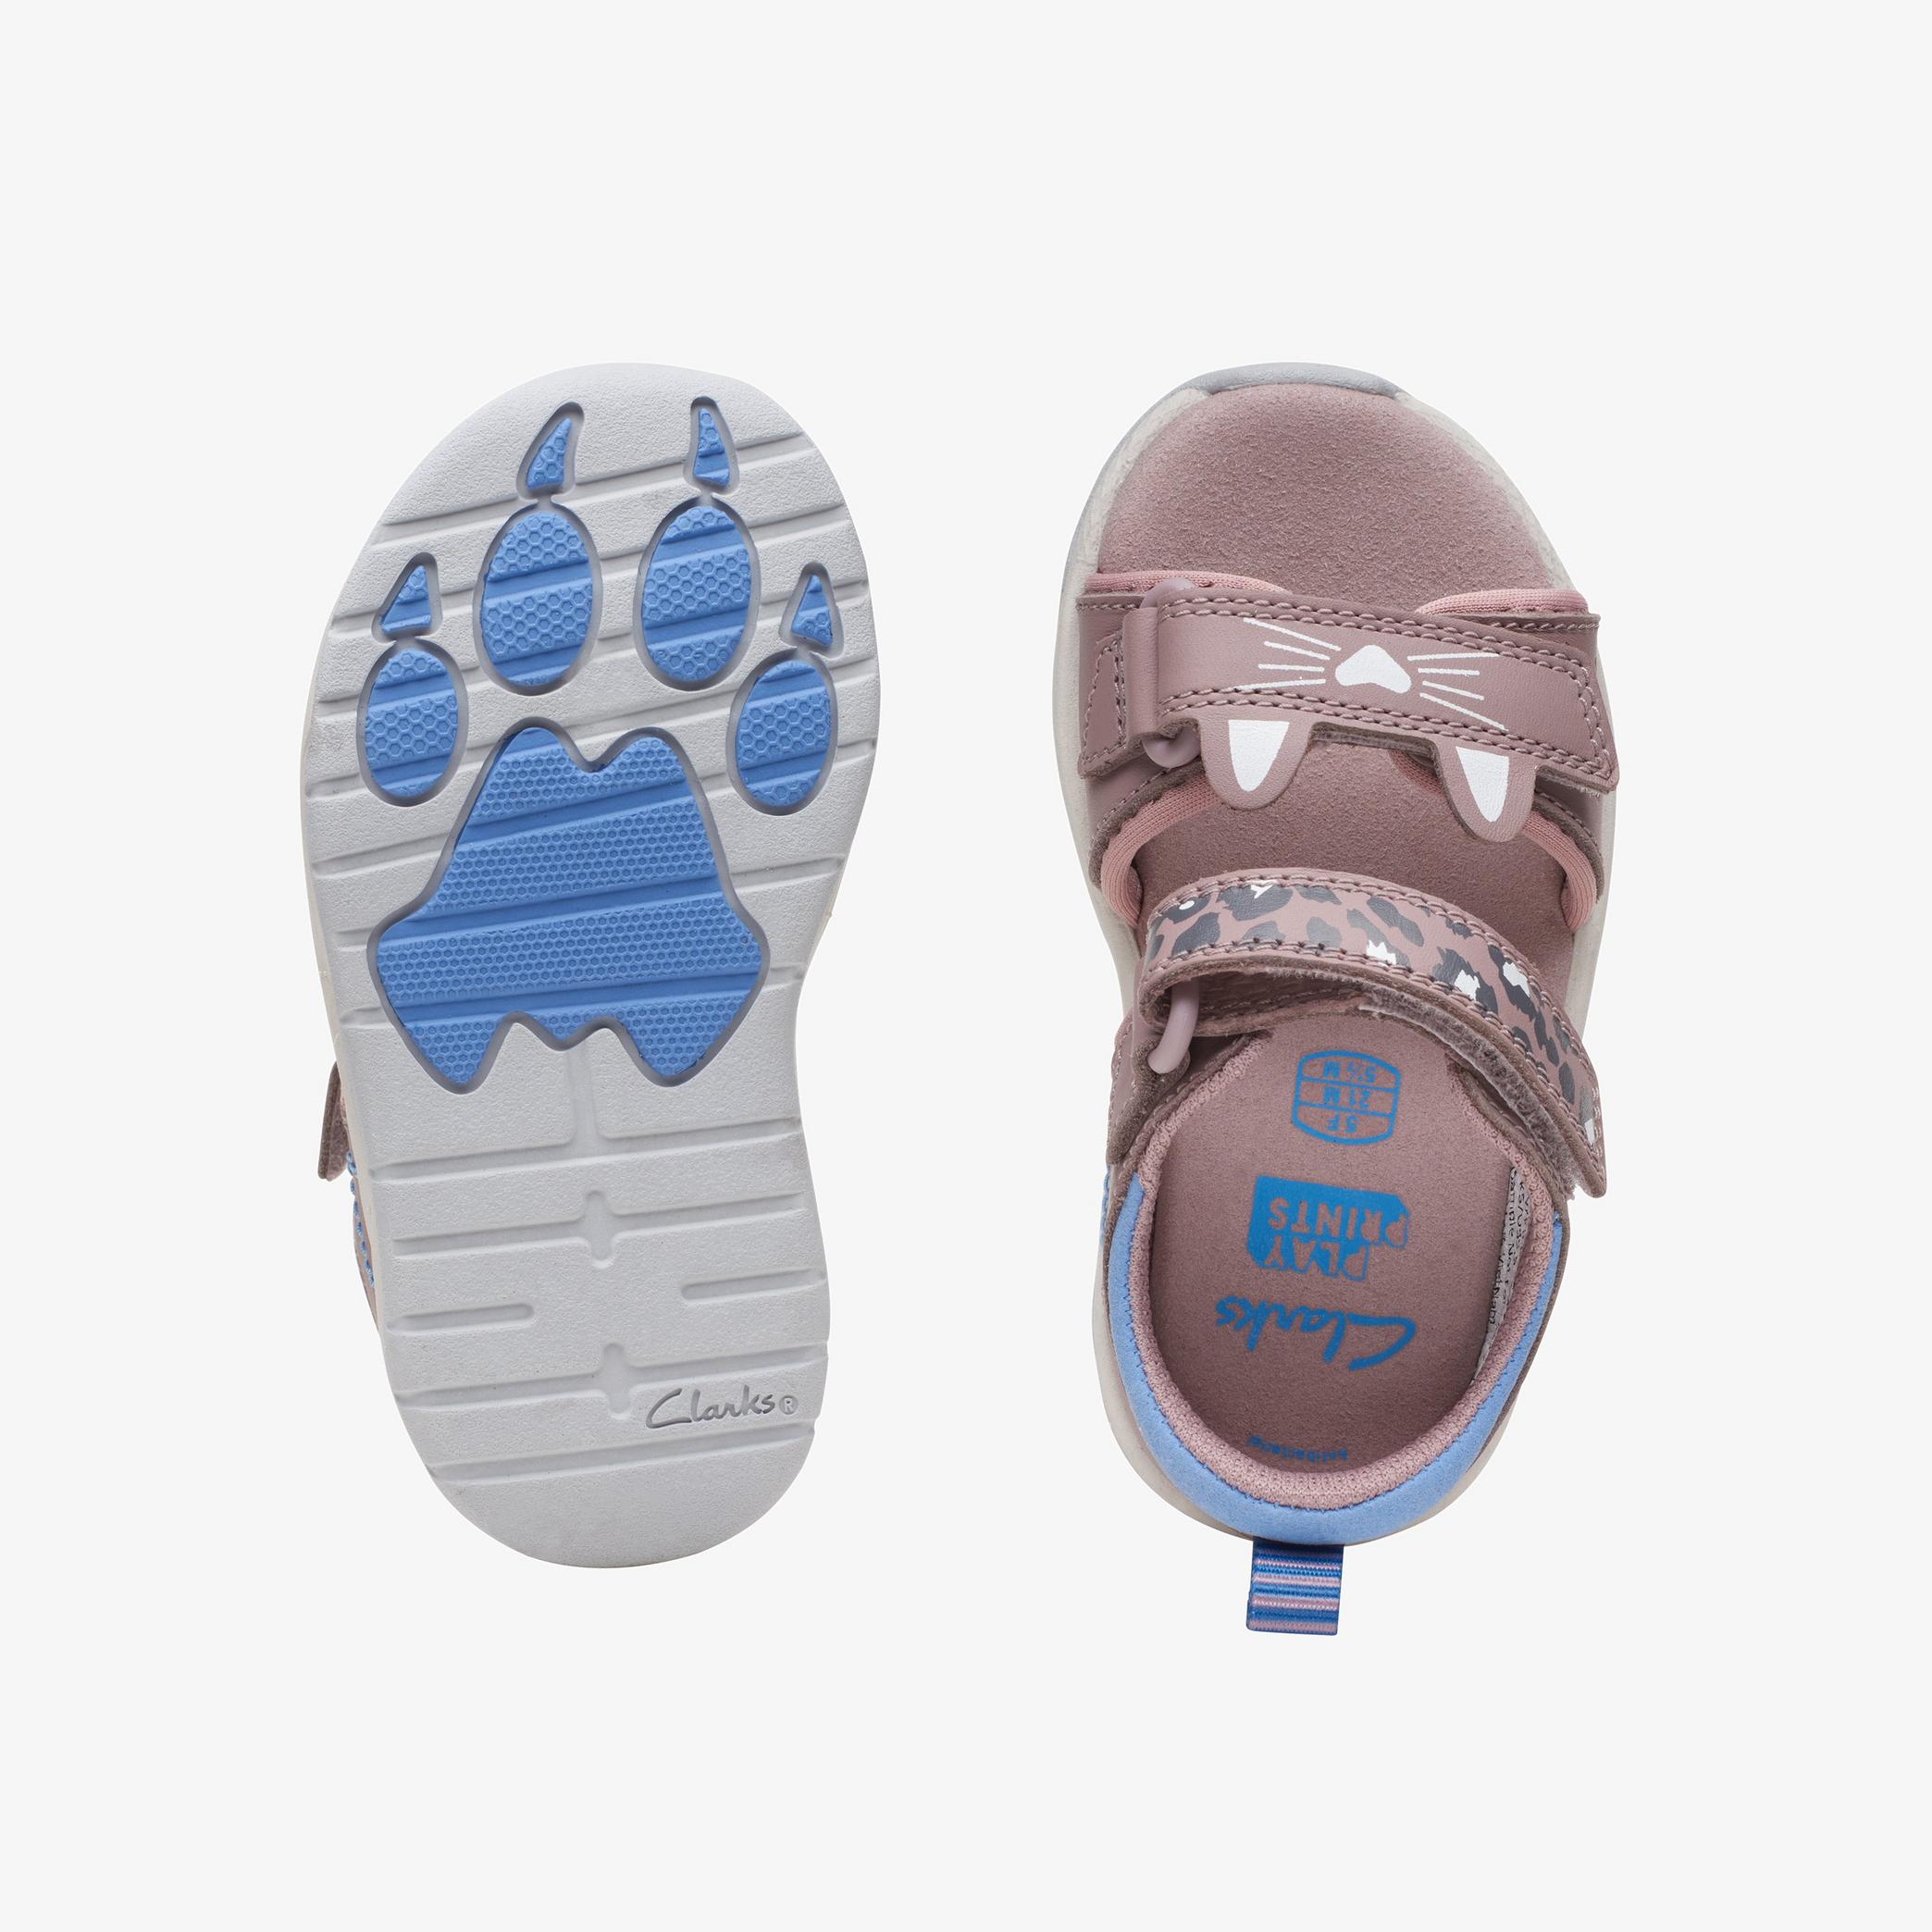 Clowder Print Toddler Grey/Pink Flat Sandals, view 6 of 6